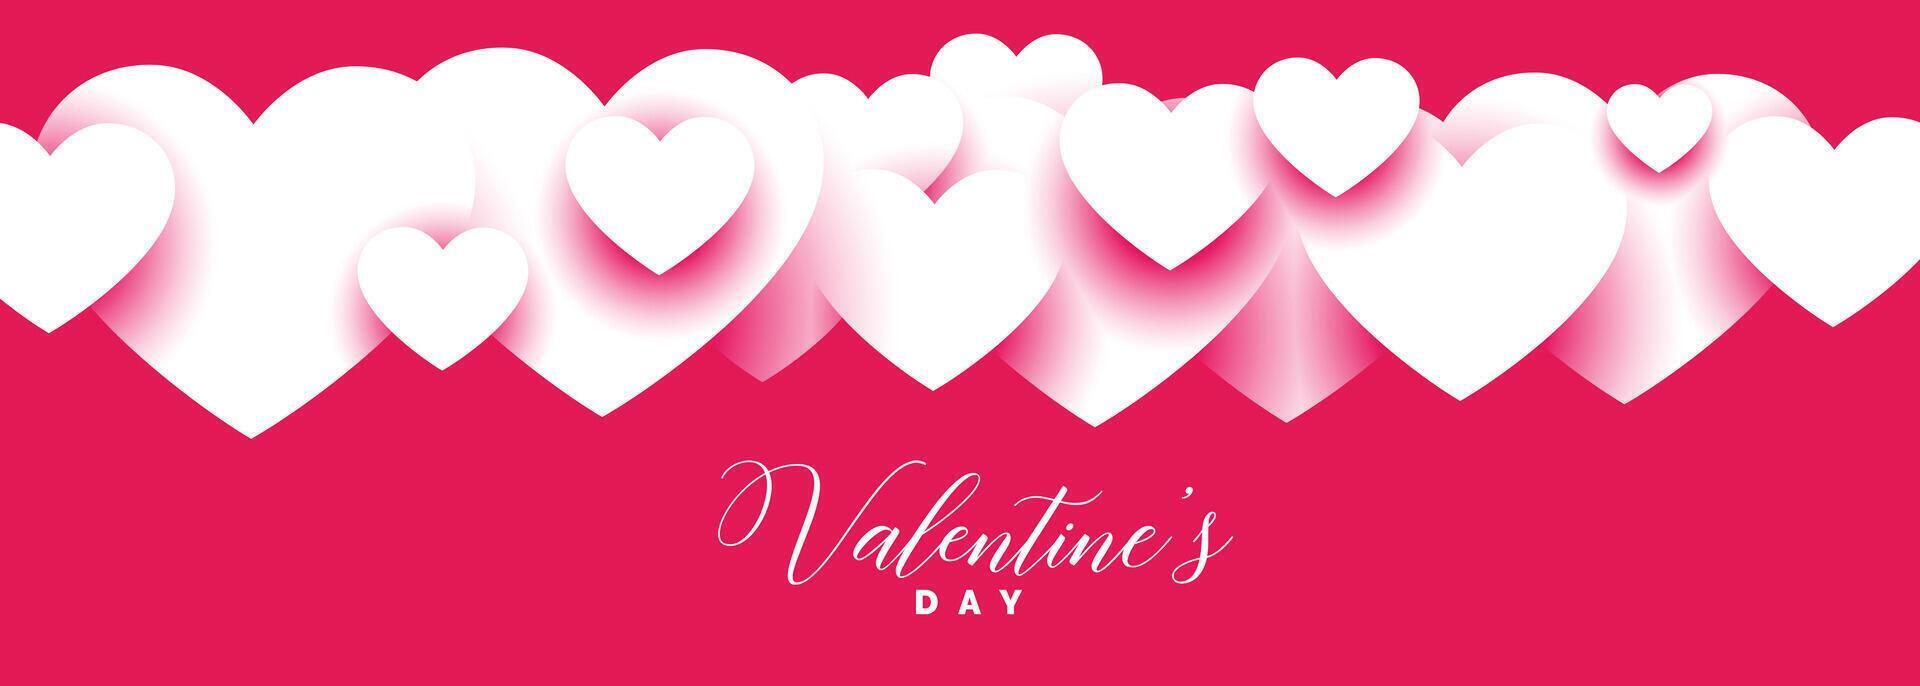 stylish pink valentines day wide banner design vector